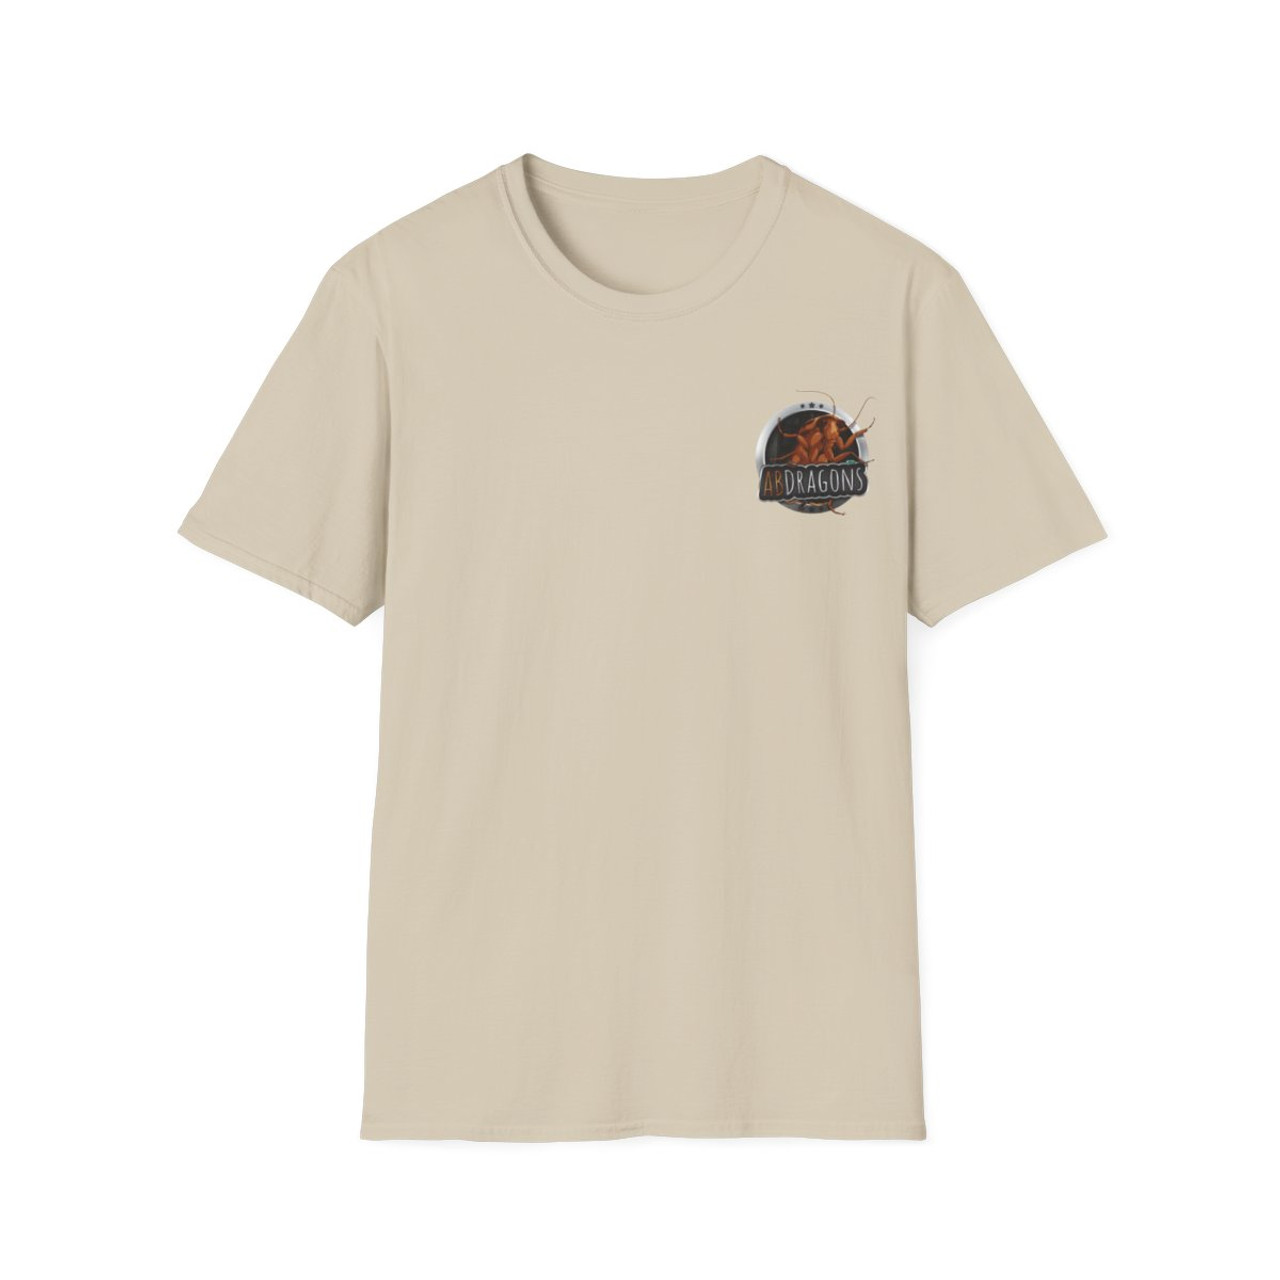 ABDragons shirt, Unisex Softstyle T-Shirt